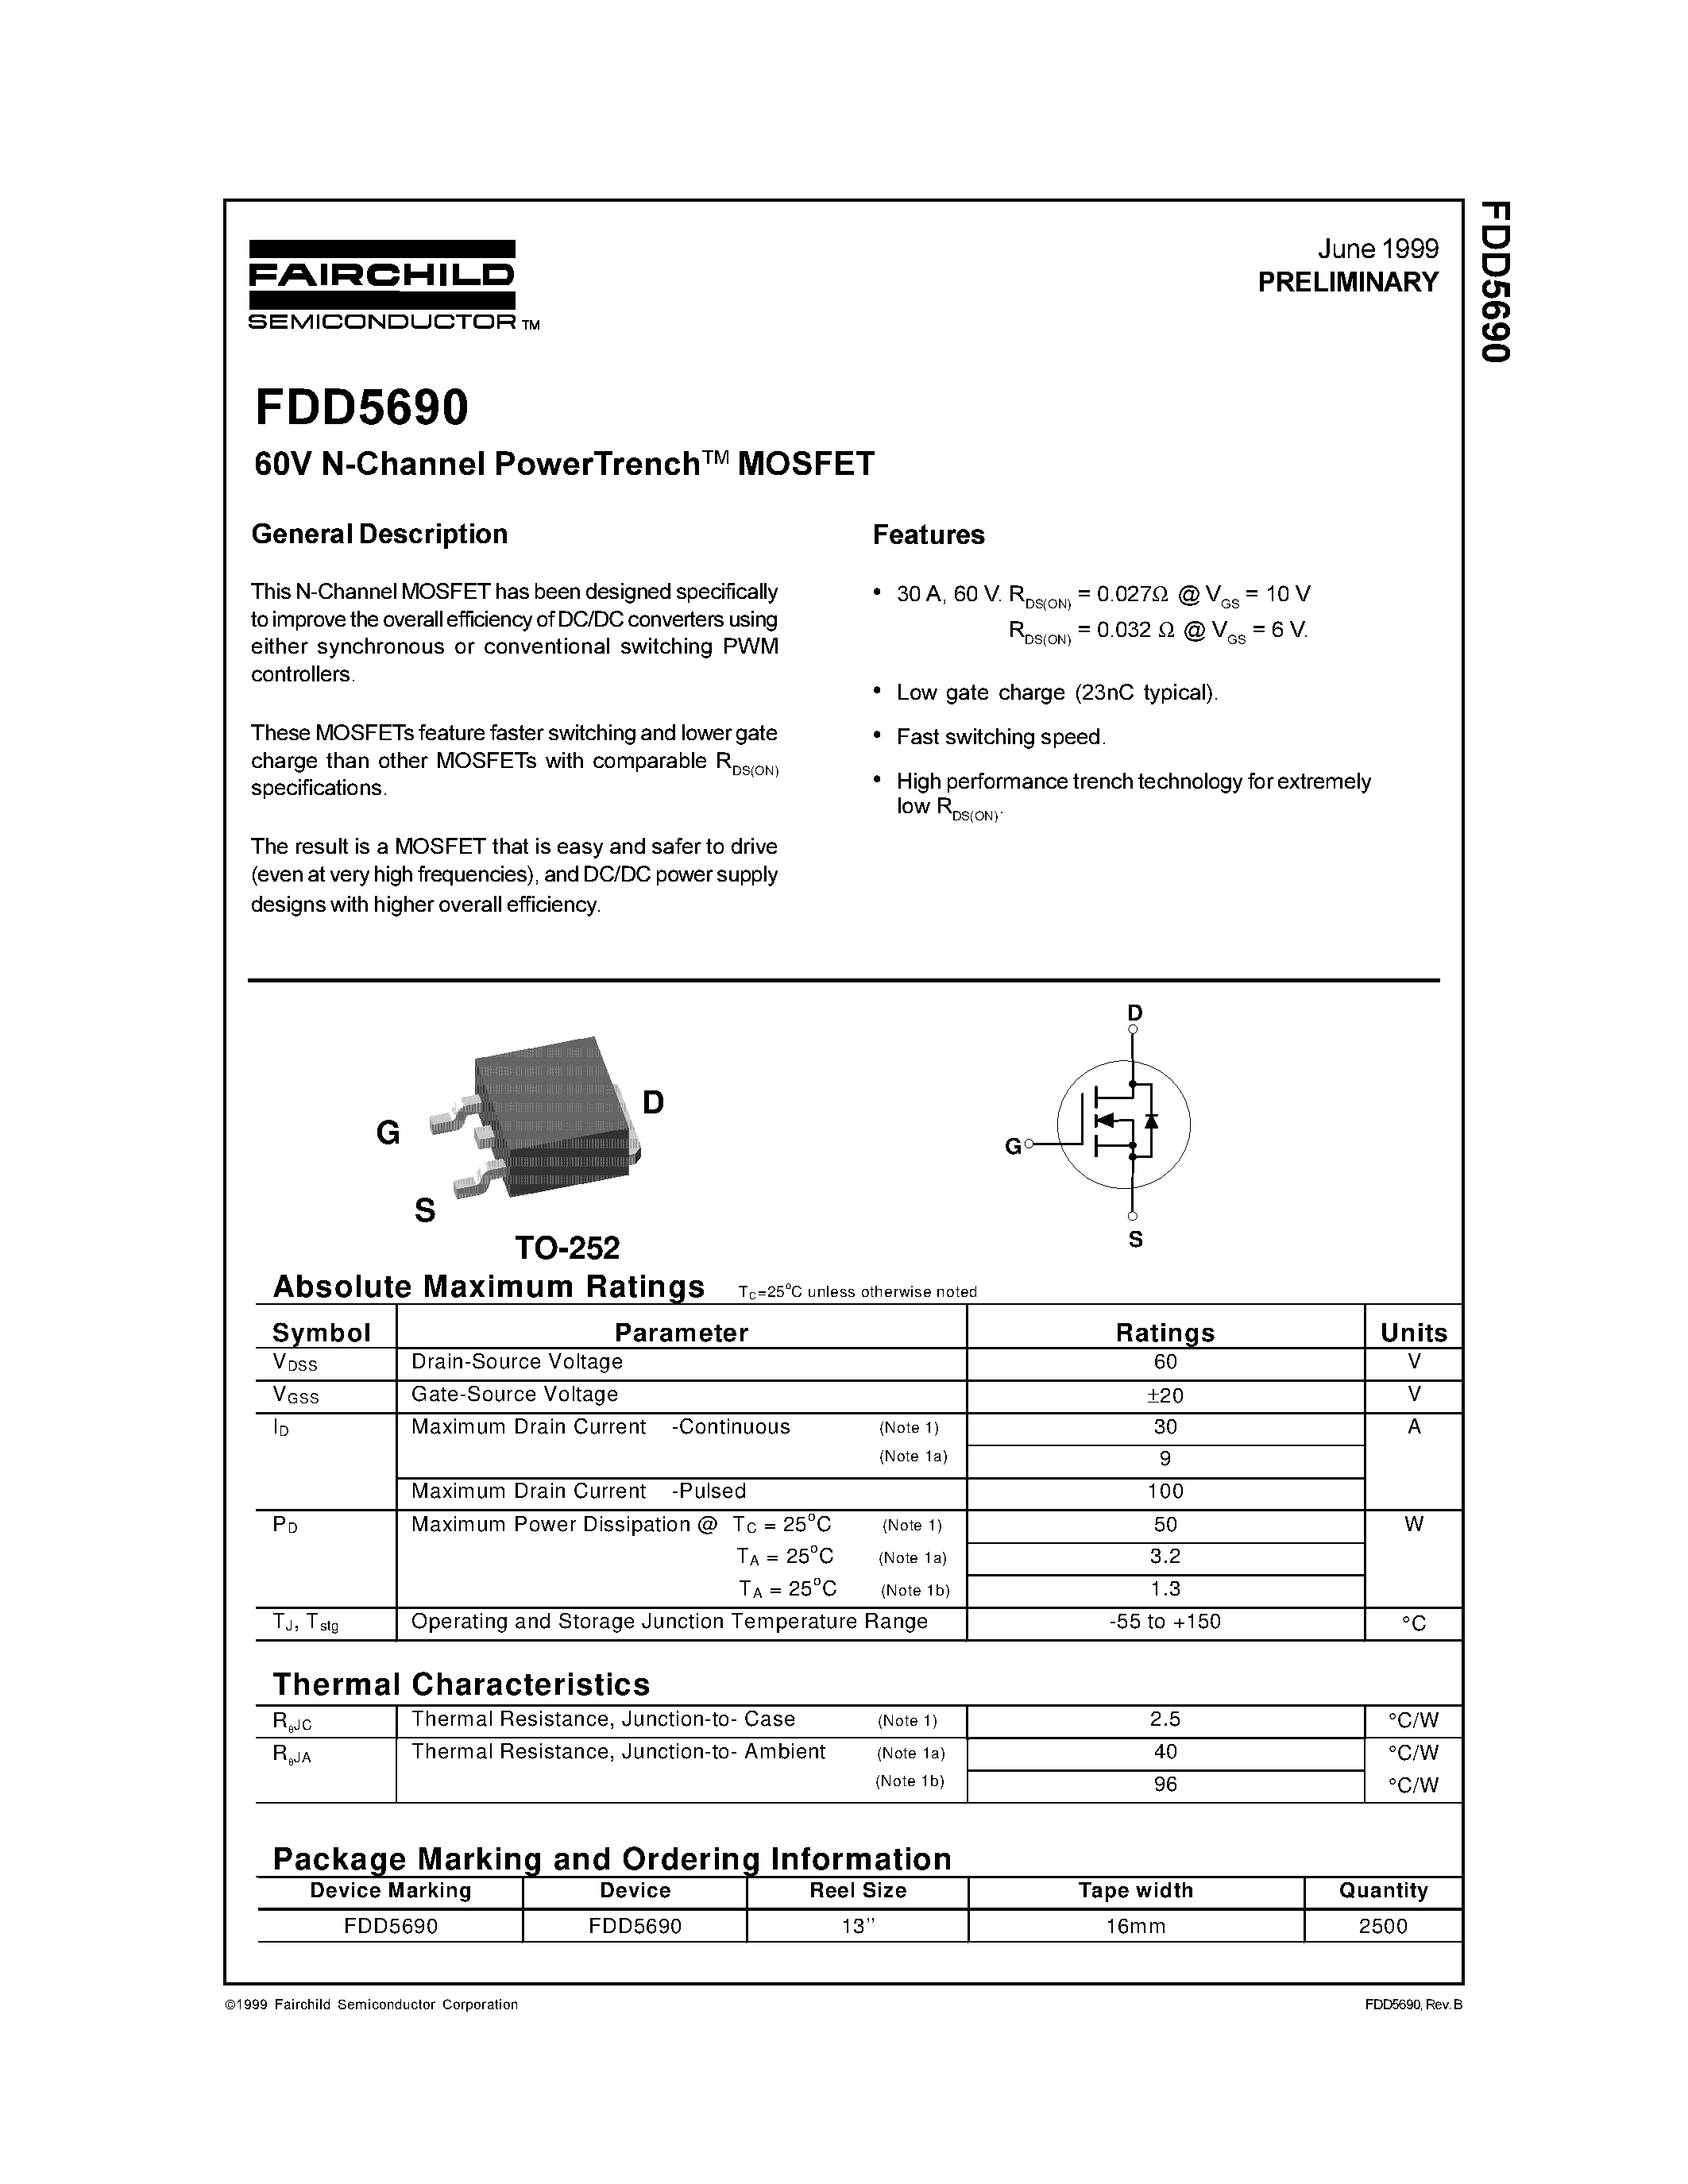 Даташит FDD5690 - 60V N-Channel PowerTrench MOSFET страница 1